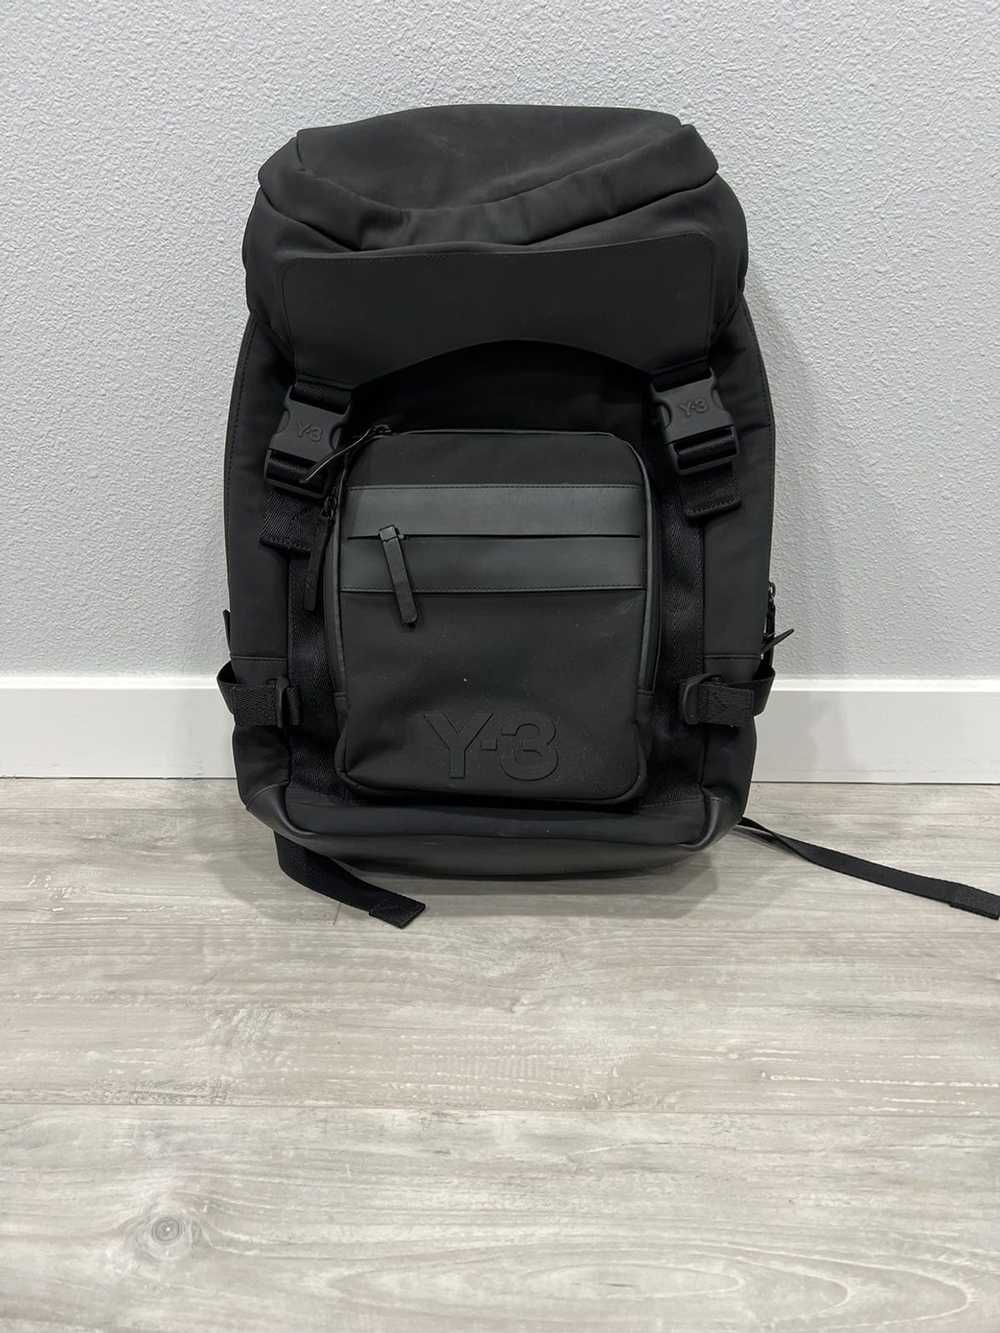 Black Supreme3M Box Logo Backpack Bag Unisex High Quality Laptop Schoo –  MAKOTO_JDM